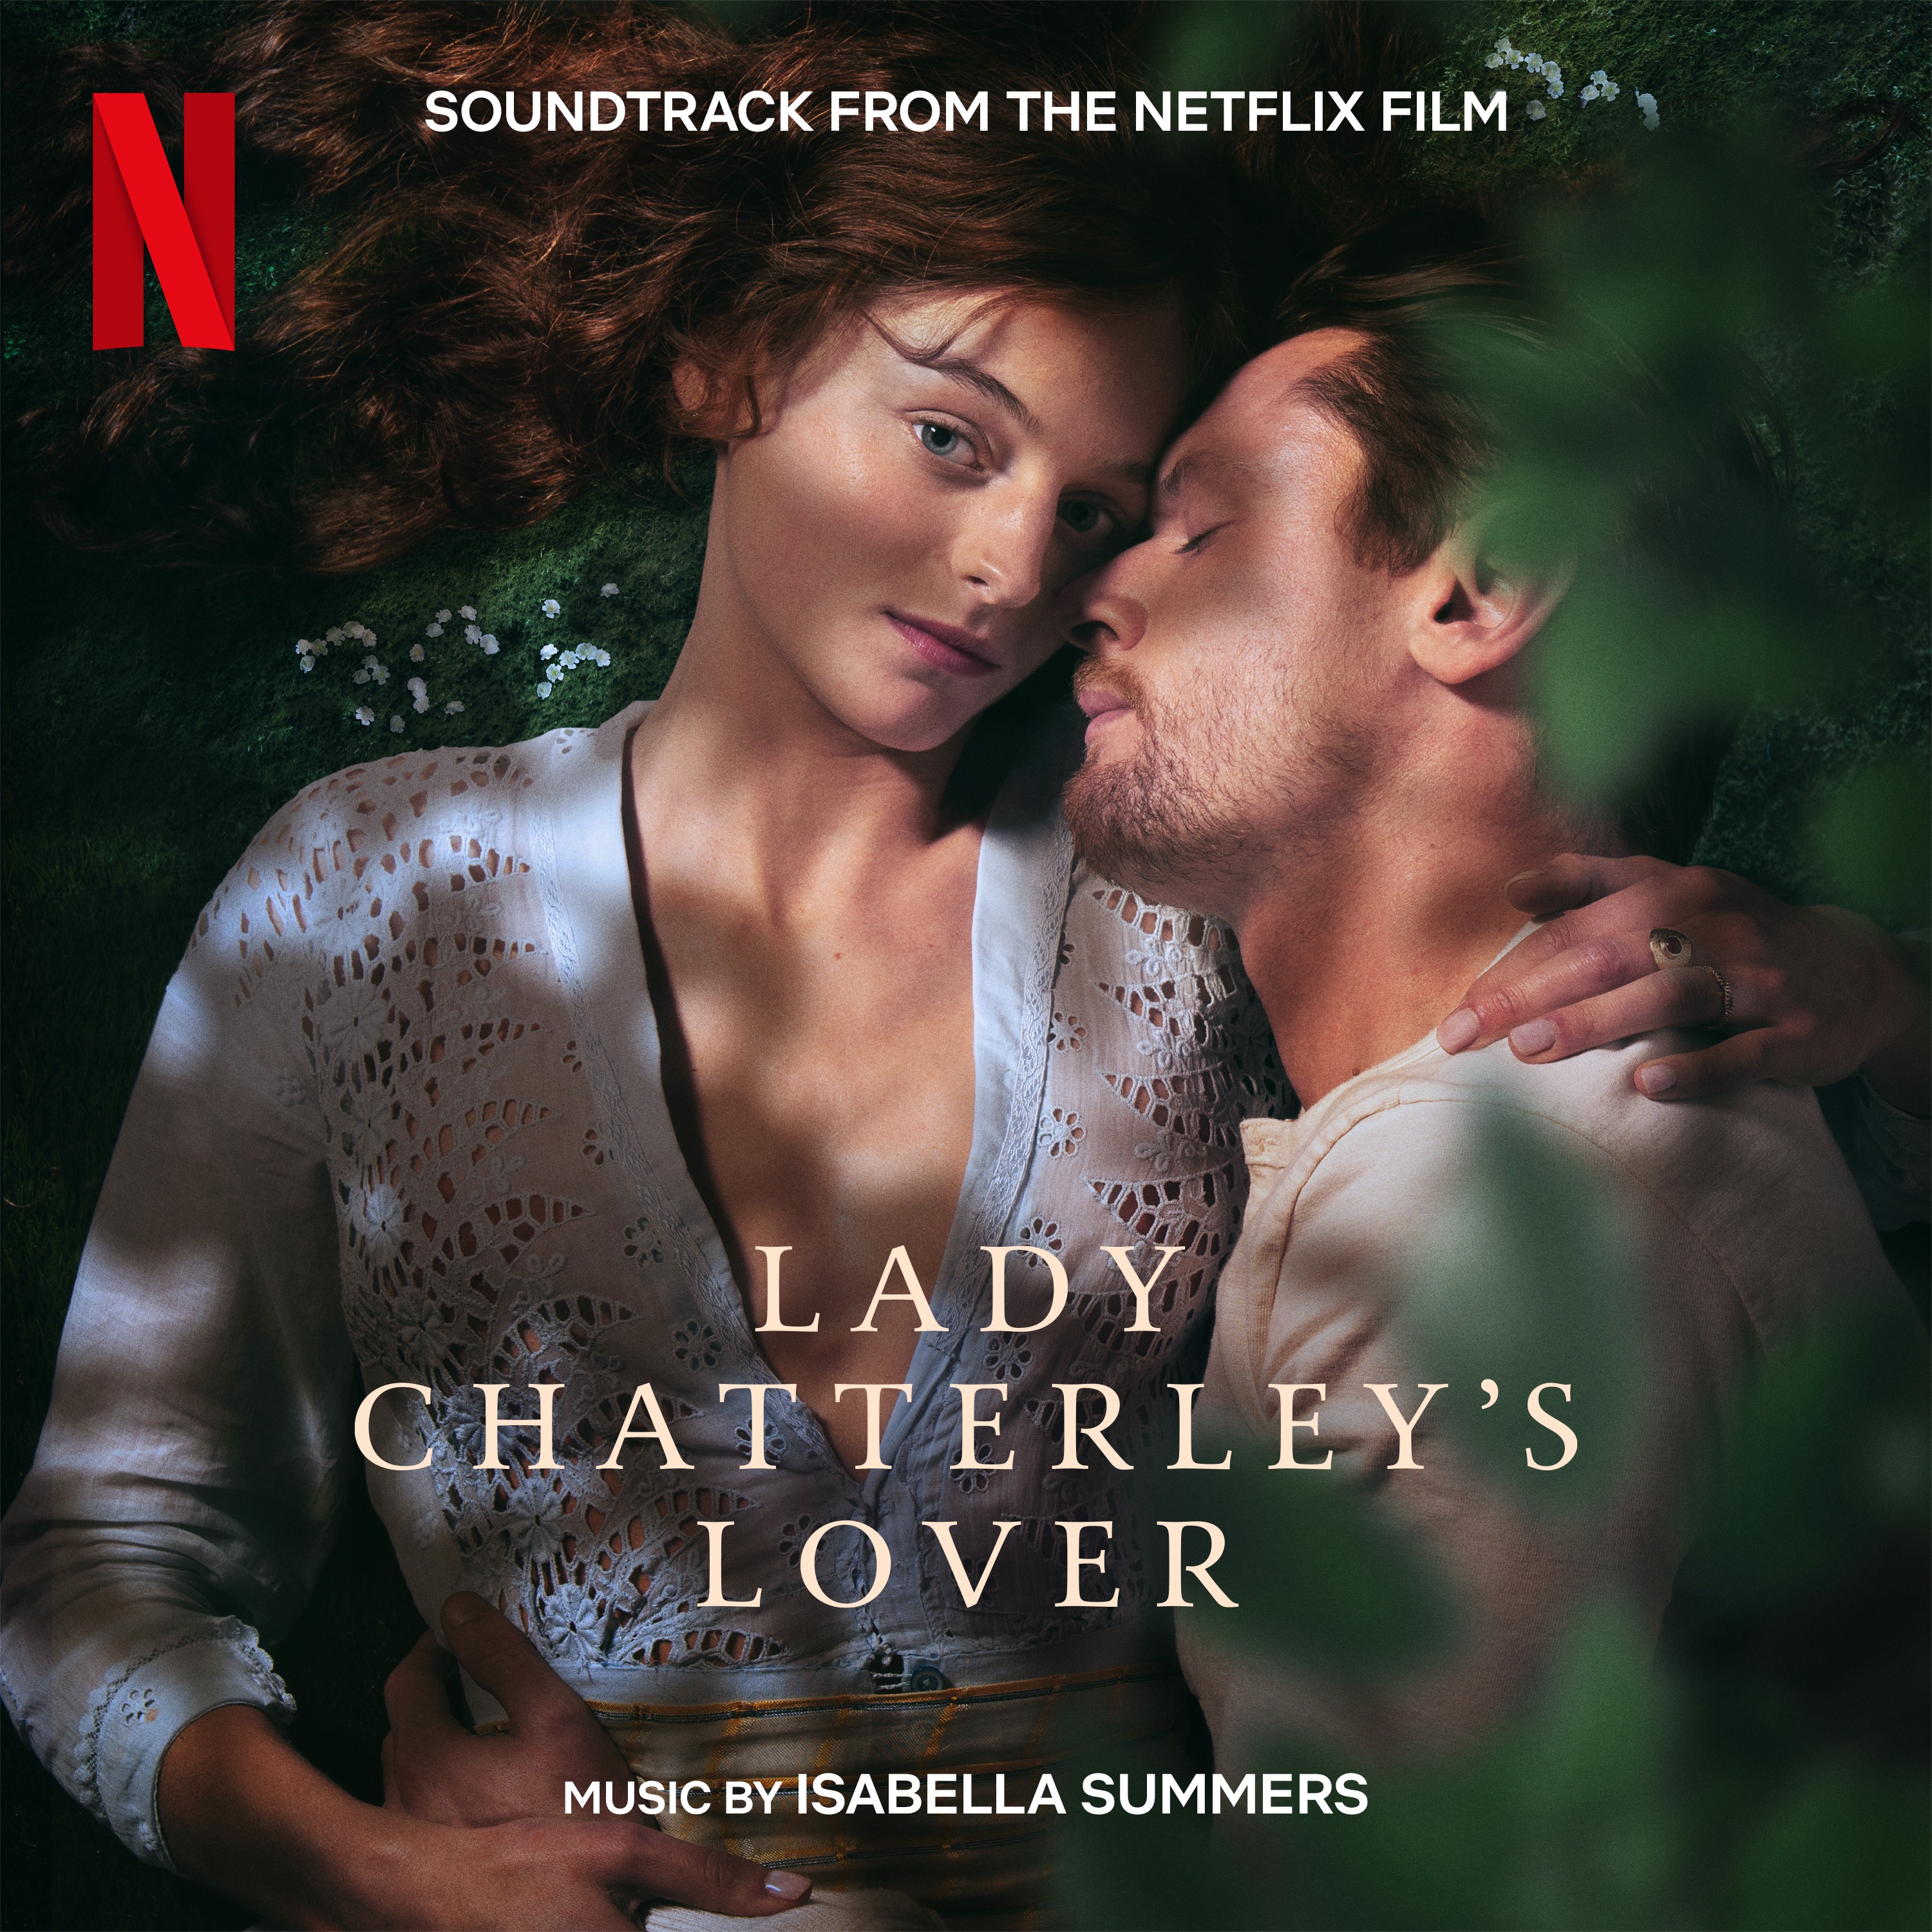 Lady chatterley's lover rain